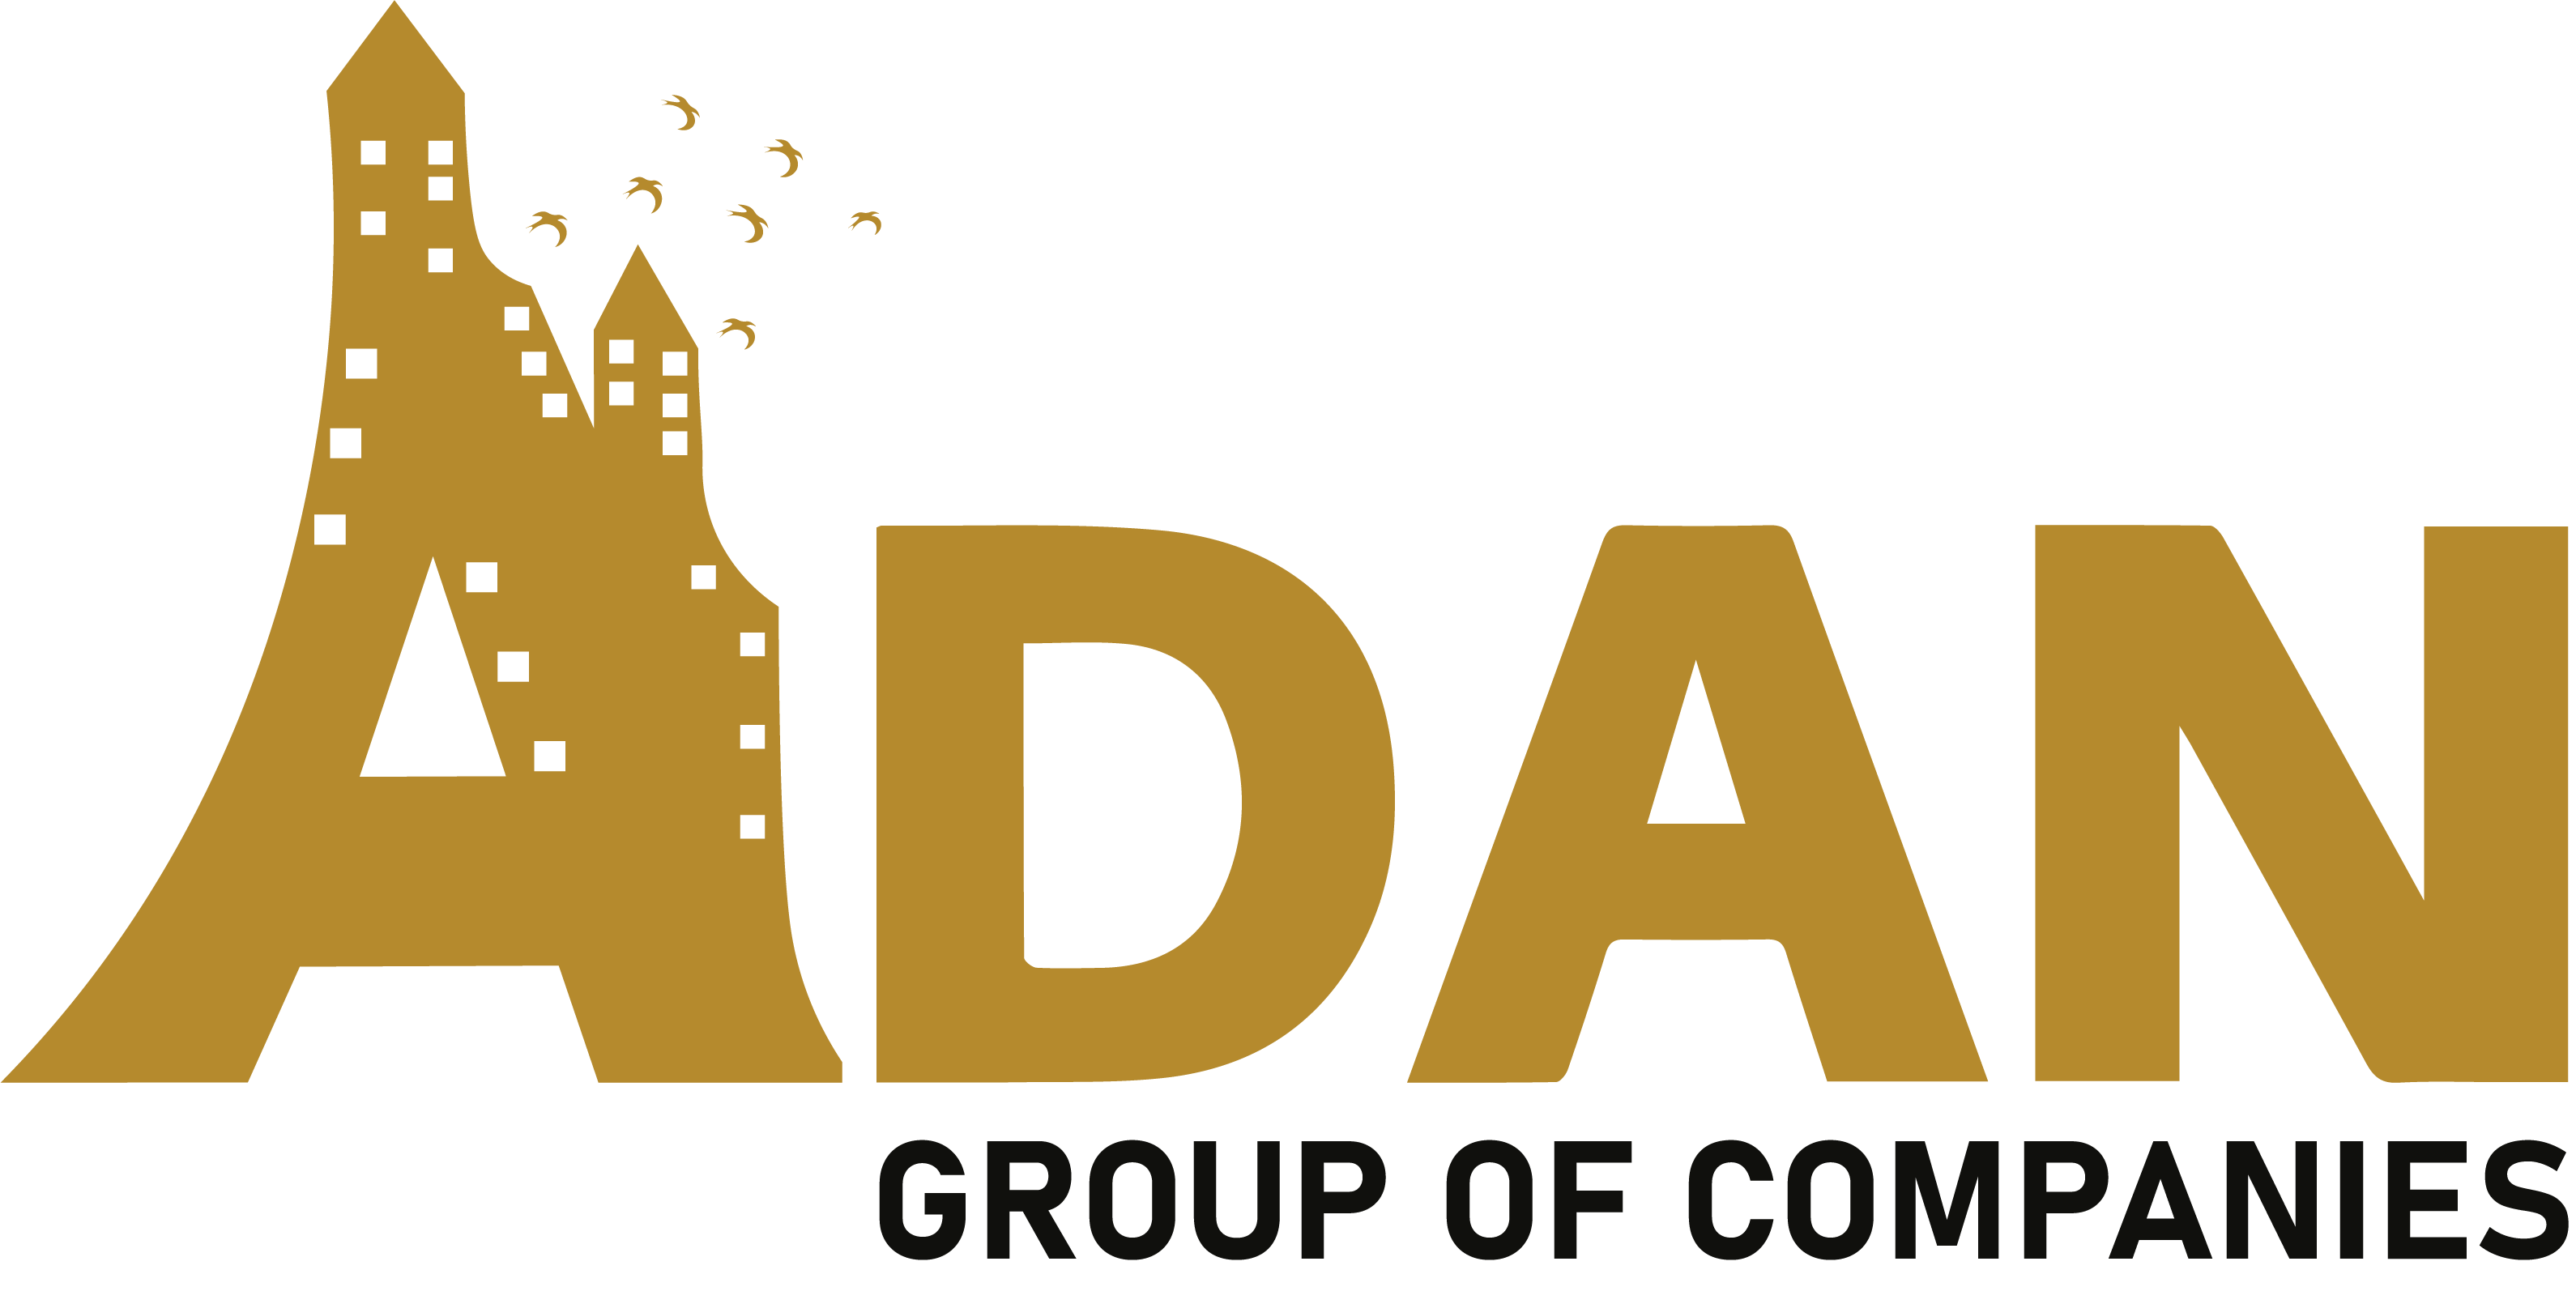 Adan Group of Companies